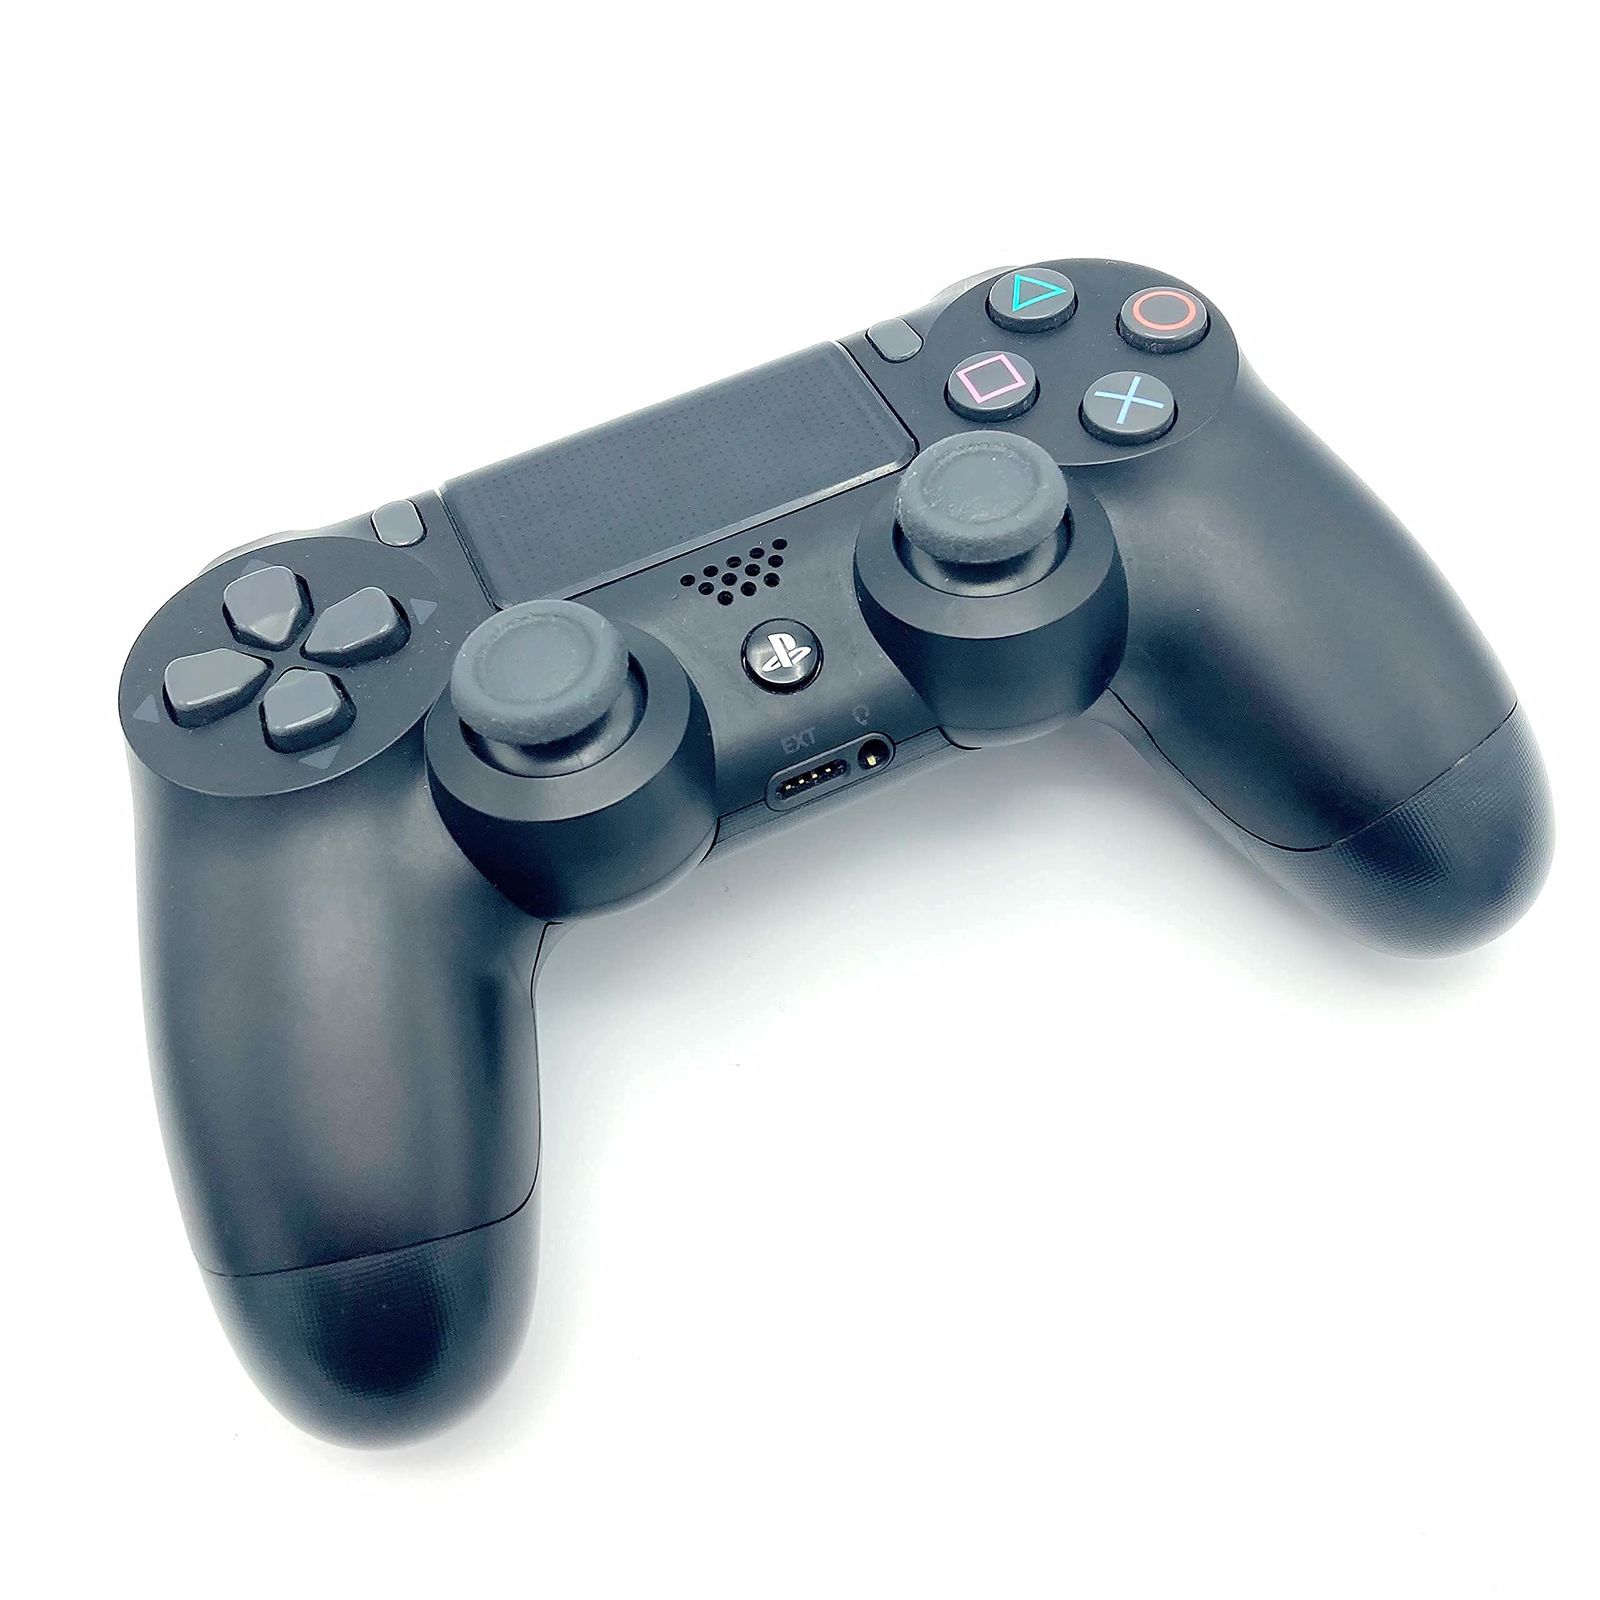 PlayStation 4 ジェット・ブラック 500GB (CUH-1100AB01)【メーカー生産終了】箱なし - メルカリ